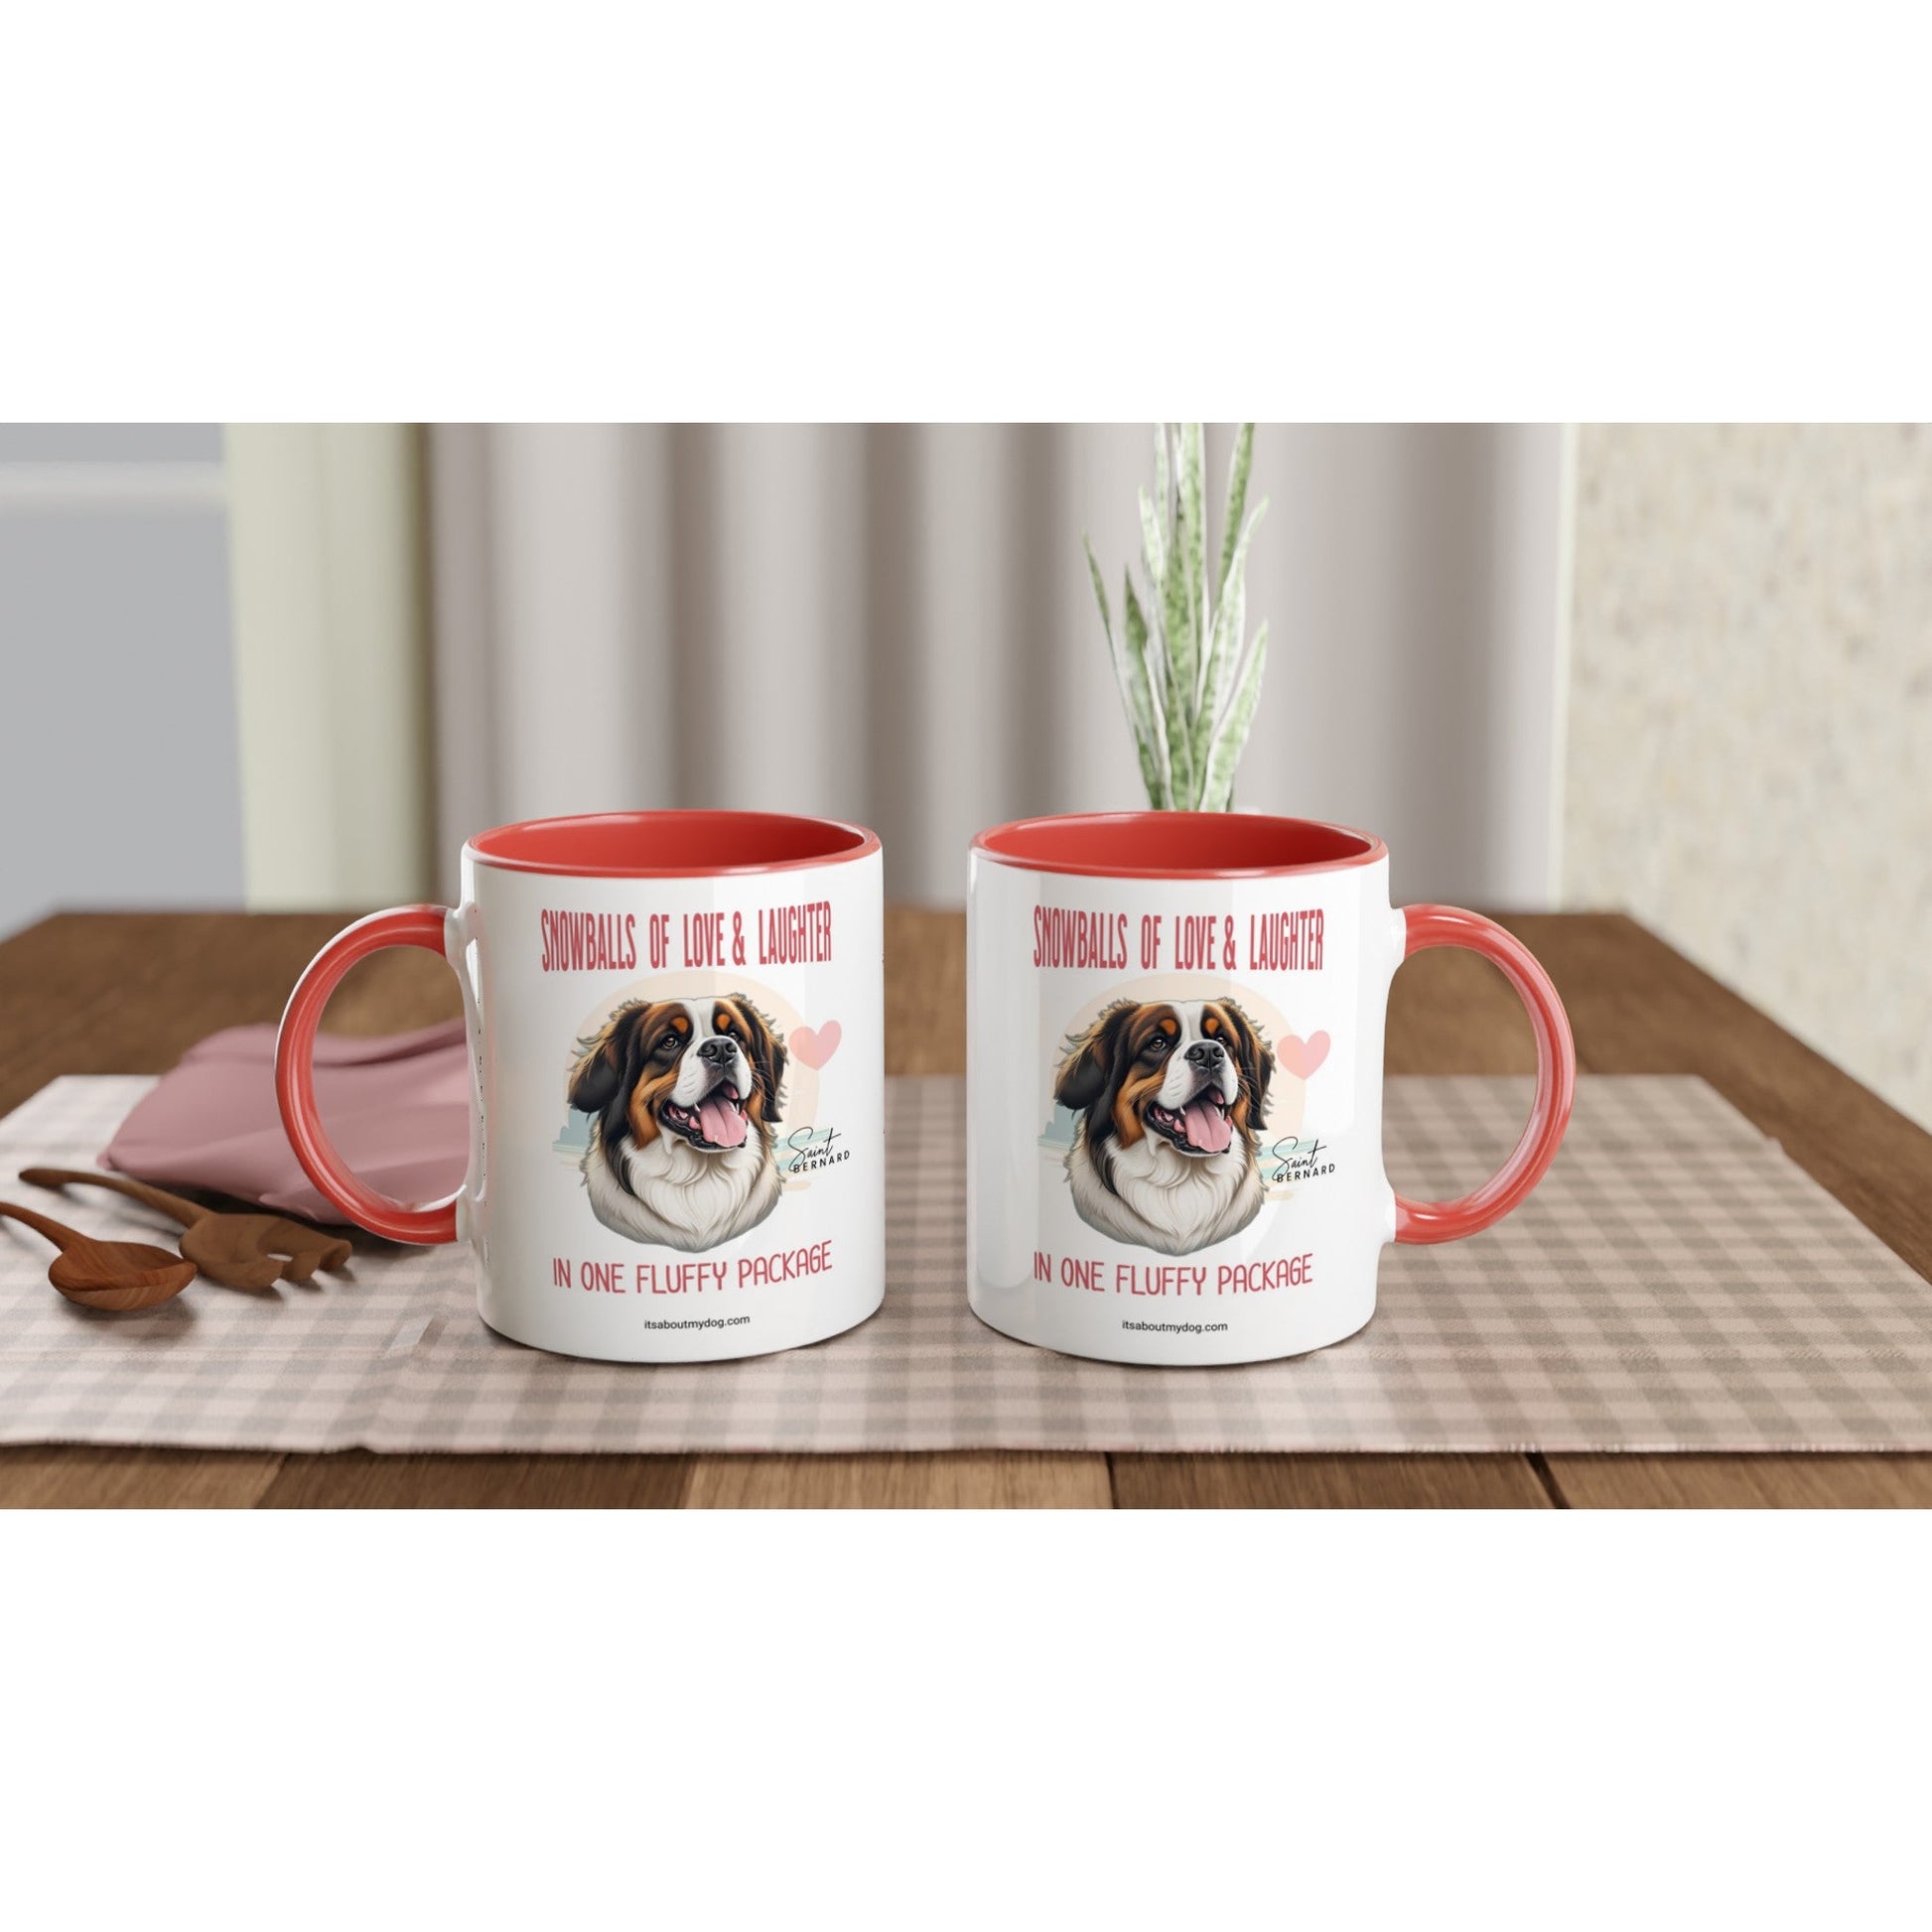 Saint Bernard-11oz Ceramic Dog Mug17.99-(FREE Delivery) Shop now at itsaboutmydog.com, dog mug, saint bernard gifts